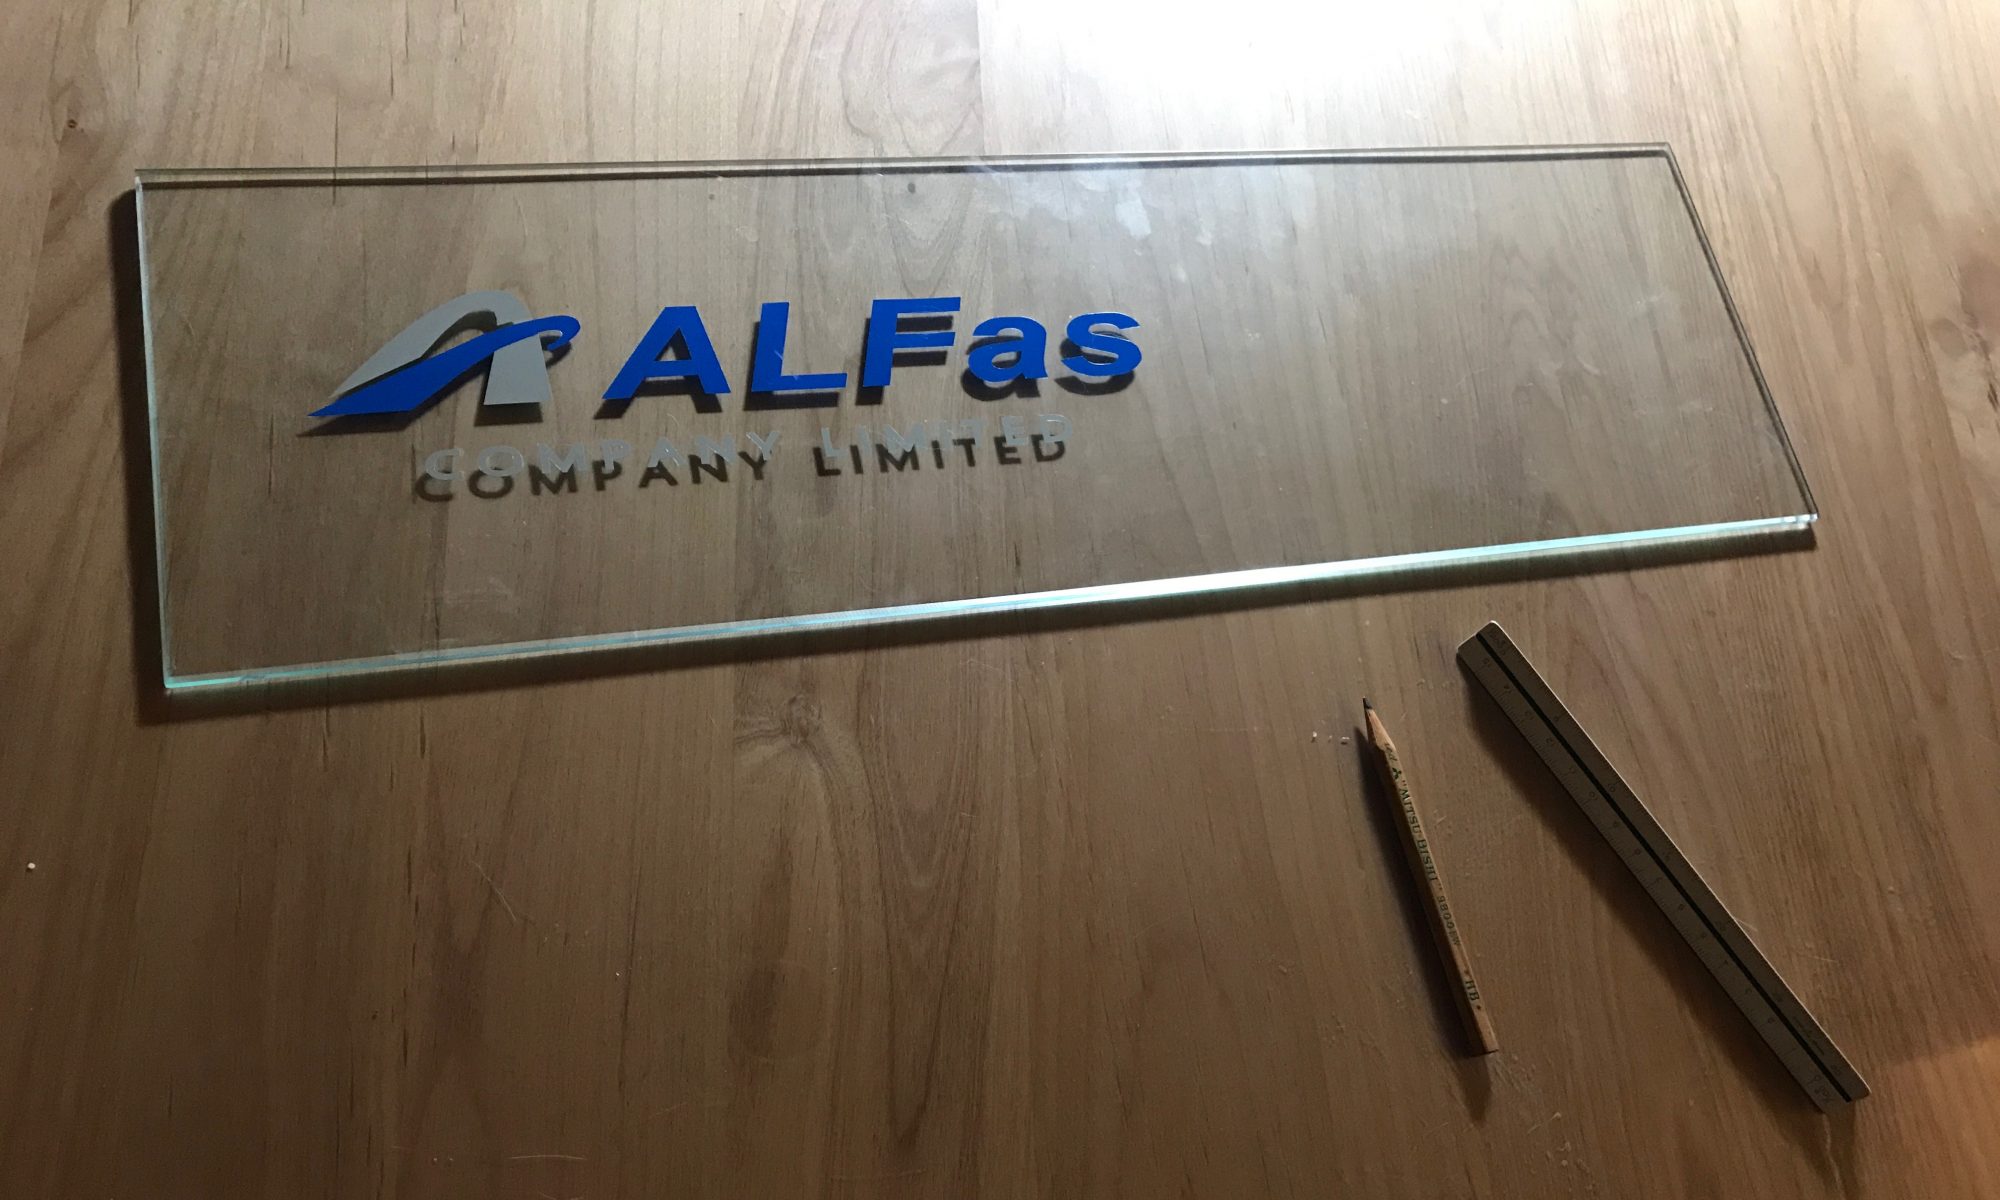 ALFas company limited